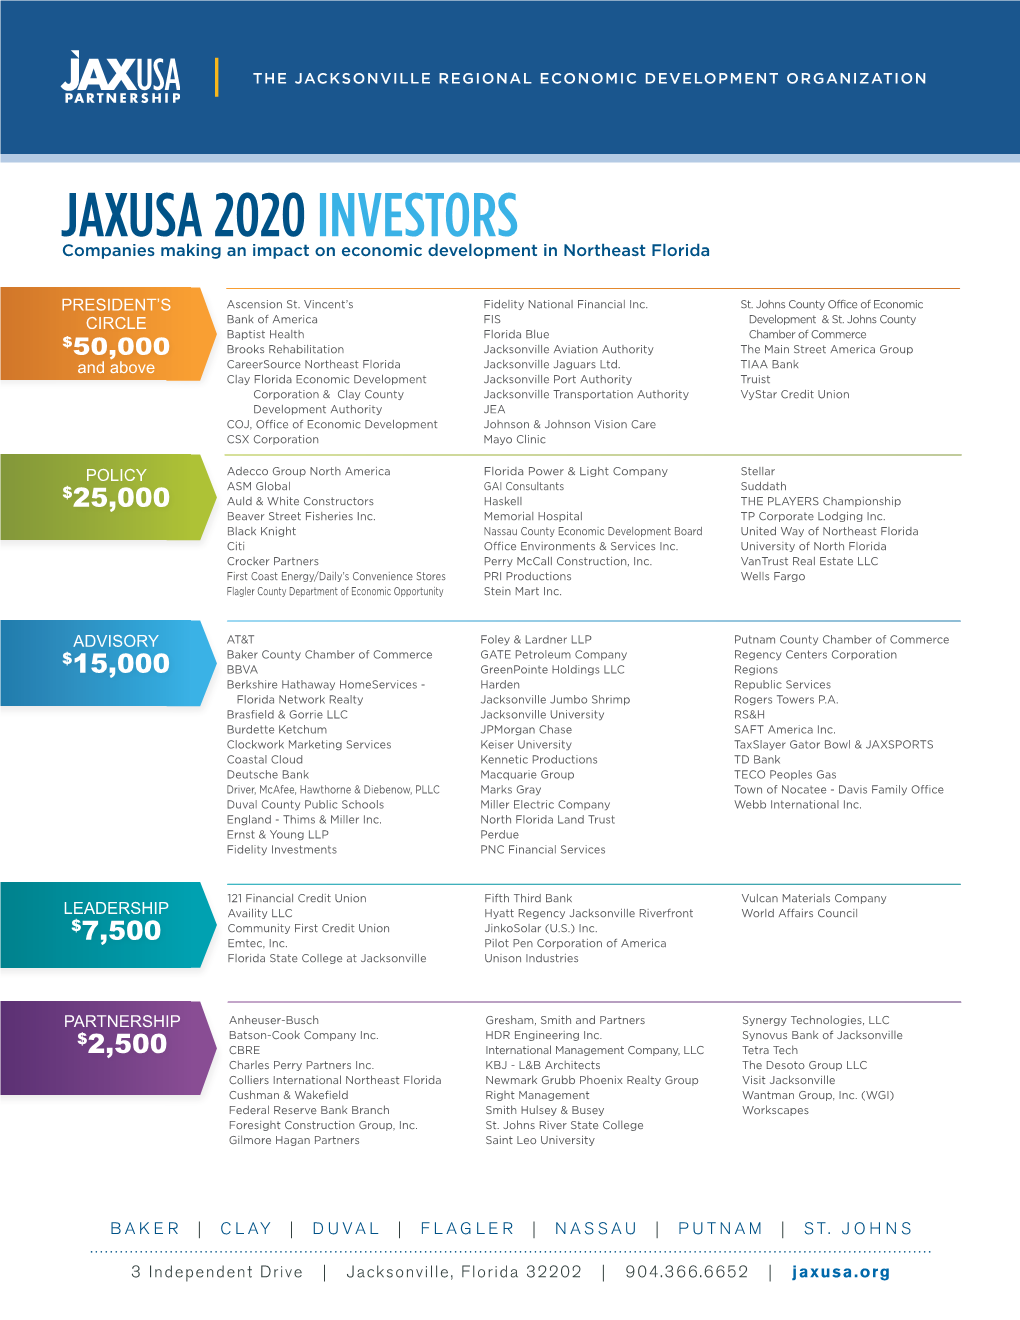 JAXUSA 2020 INVESTORS Companies Making an Impact on Economic Development in Northeast Florida